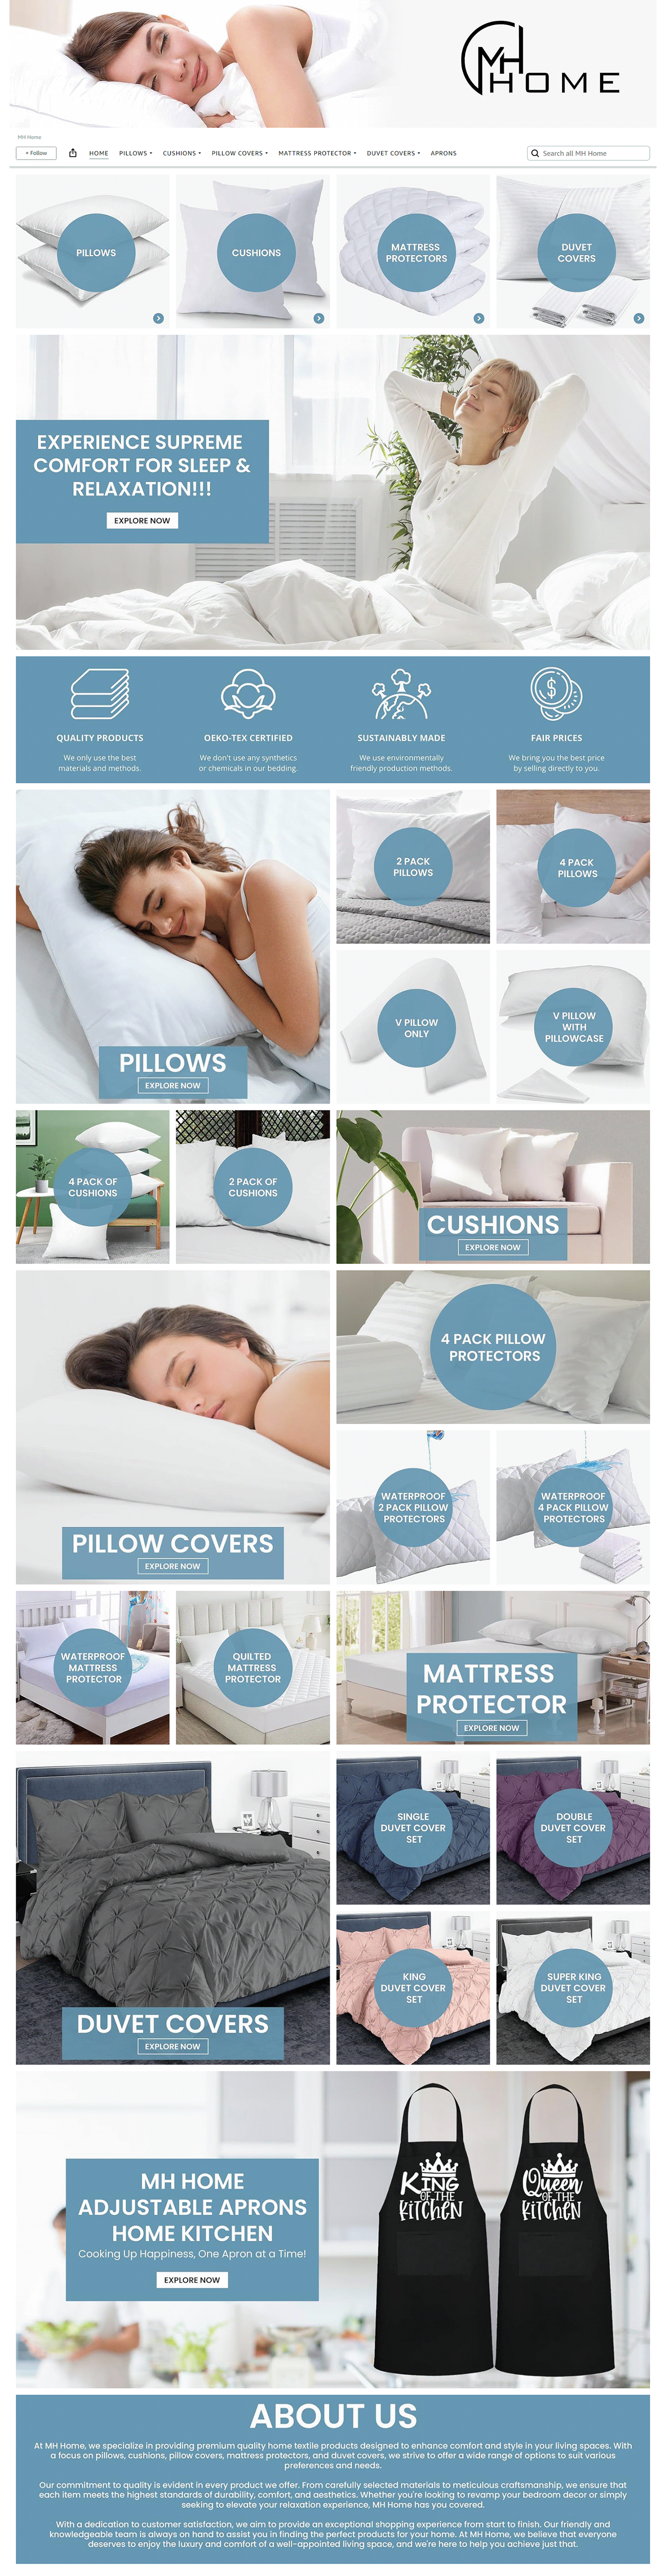 amazon brand store enhanced content enhanced brand content amazon ebc listing A+ Content Amazon pillows design A+